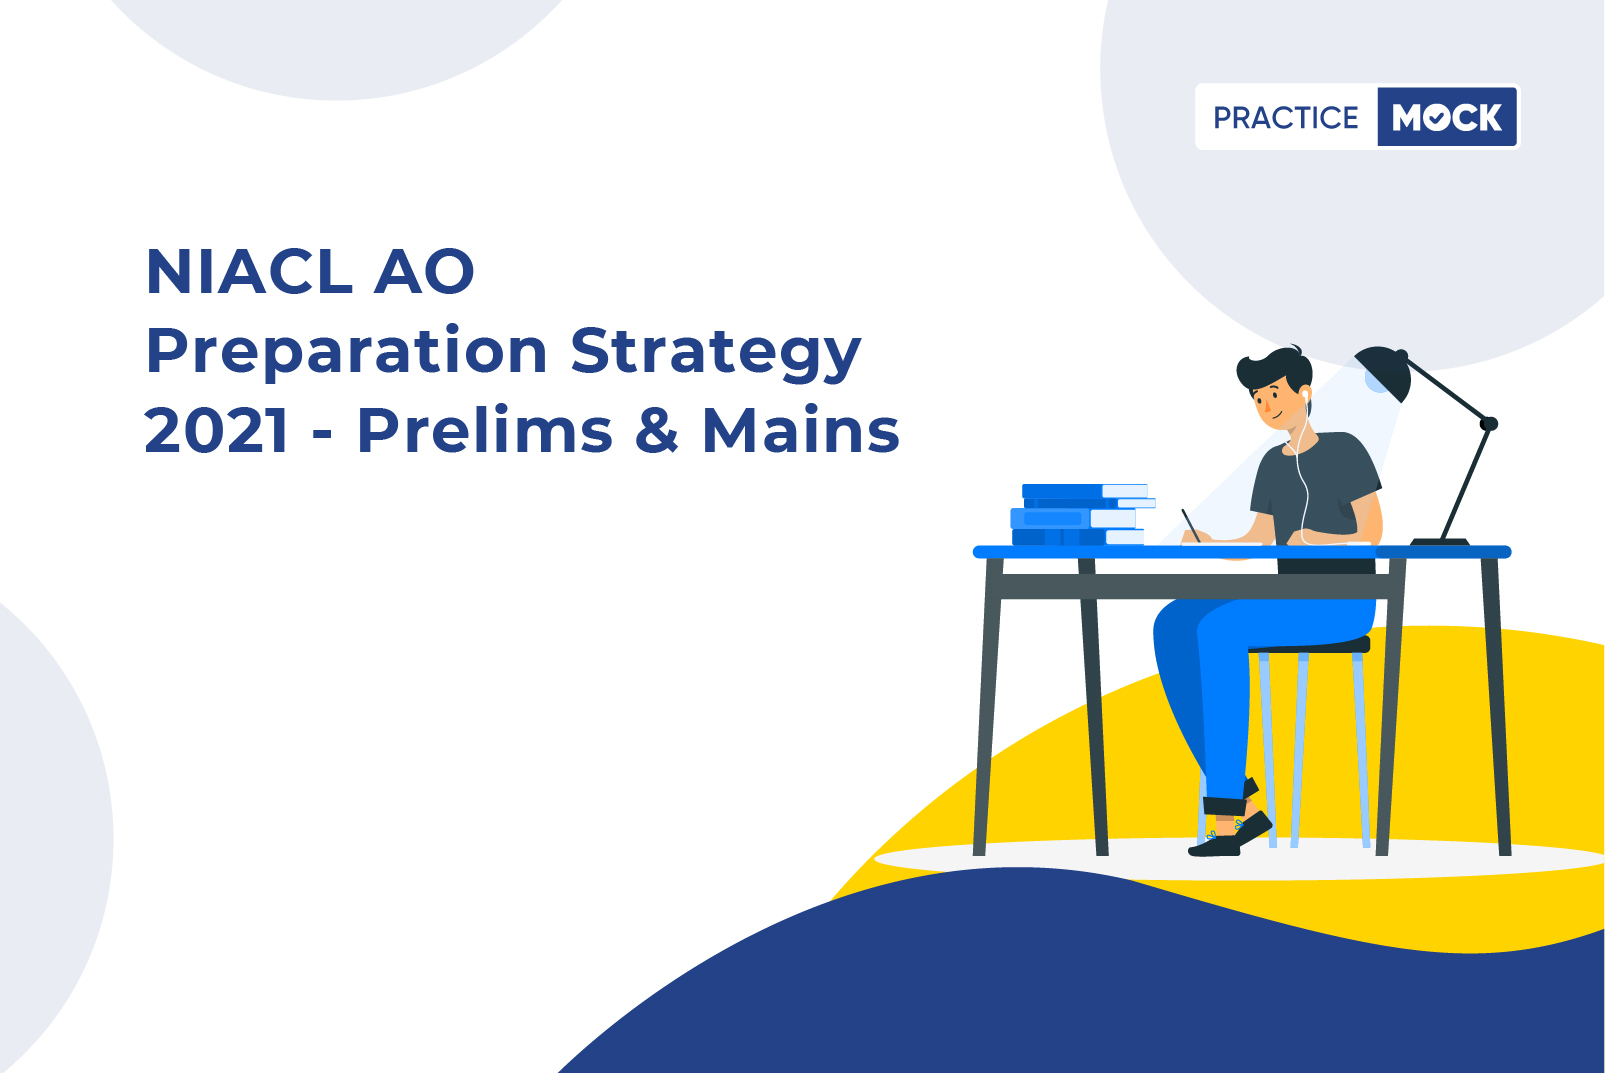 NIACL AO Preparation Strategy 2021 - Prelims & Mains